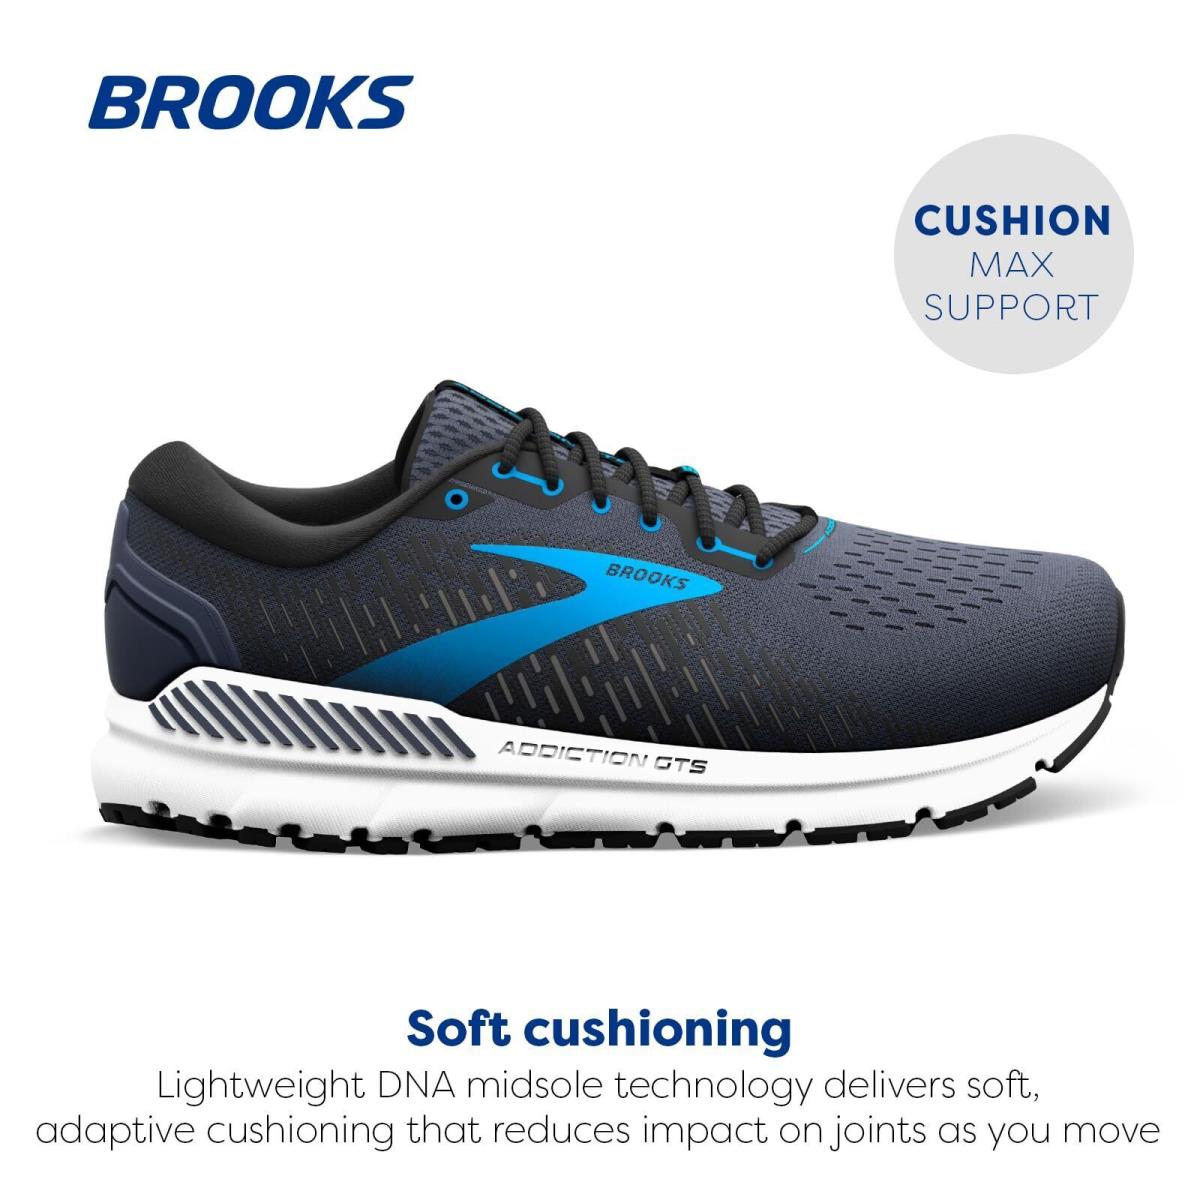 Brooks Men`s Addiction Gts 15 Running Shoe - India Ink/black/blue - 8 Medium US